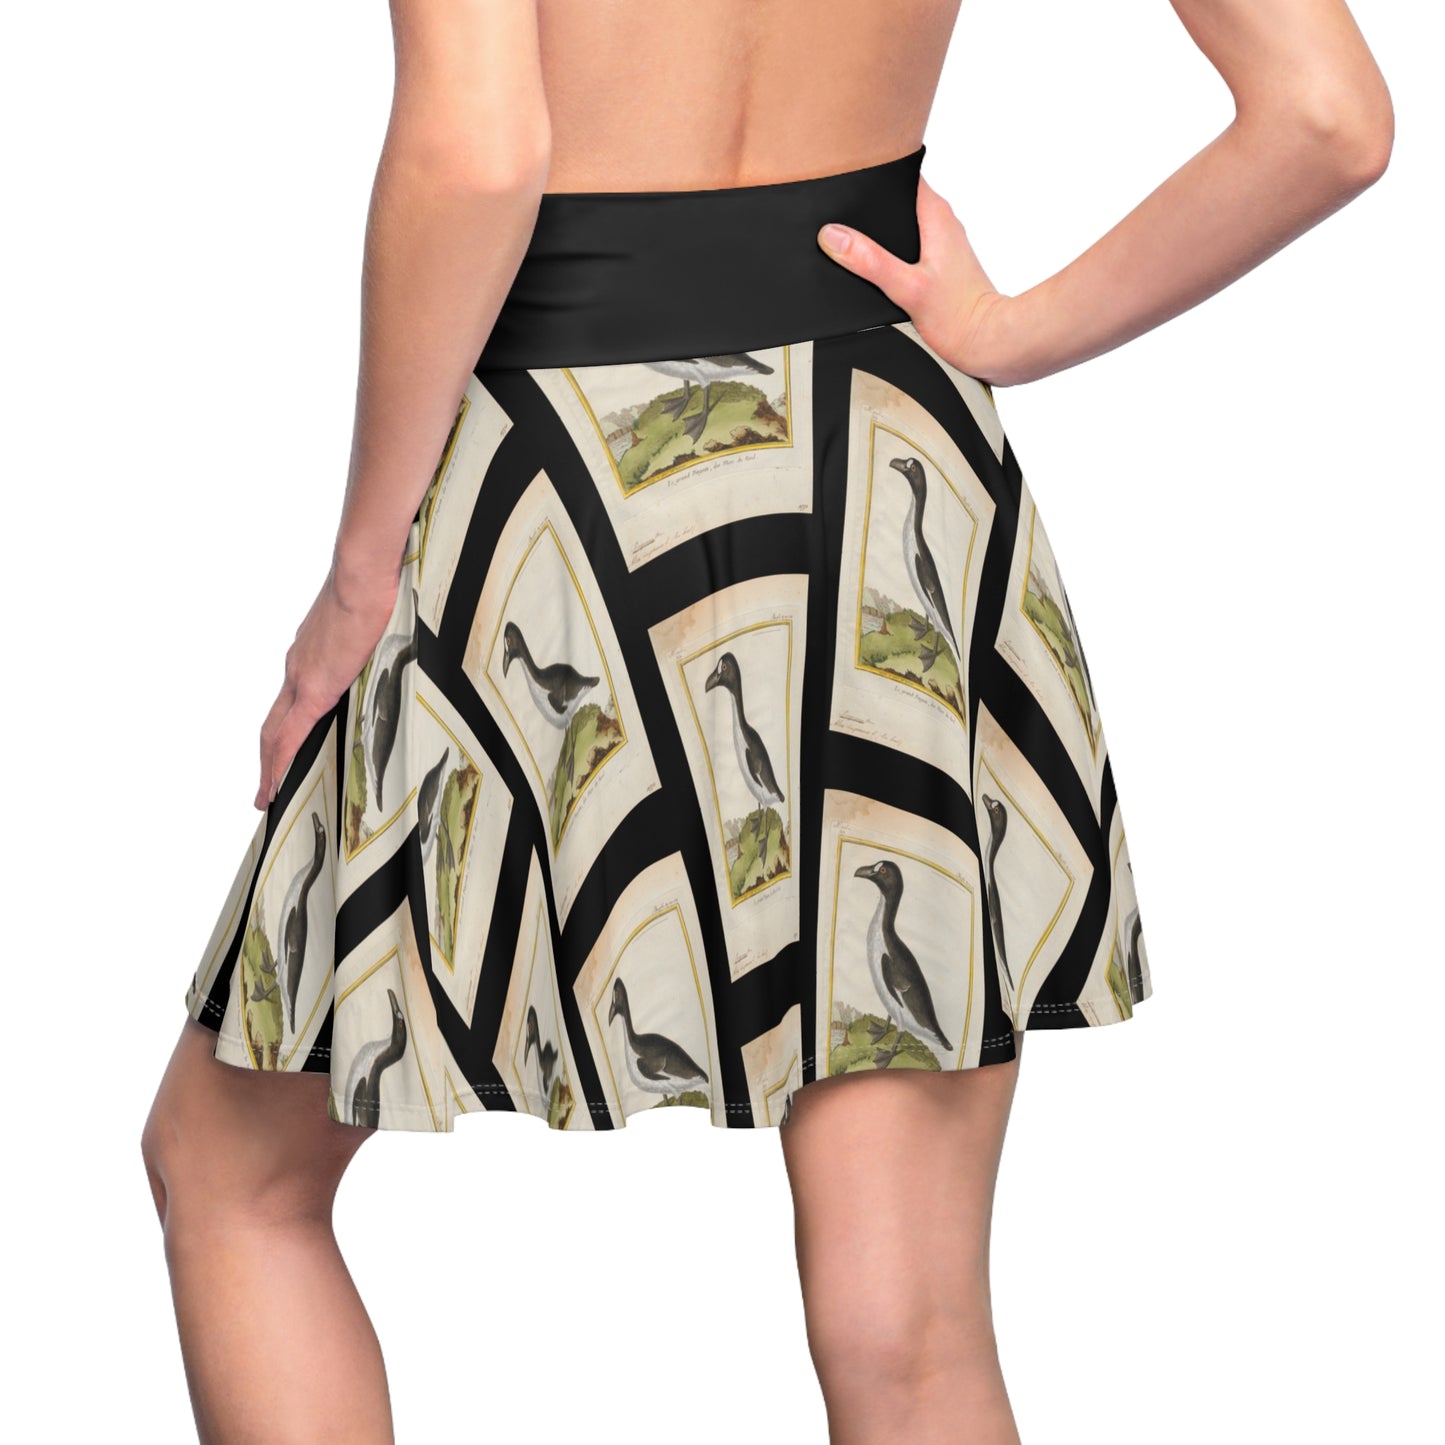 The Great Auk Skirt